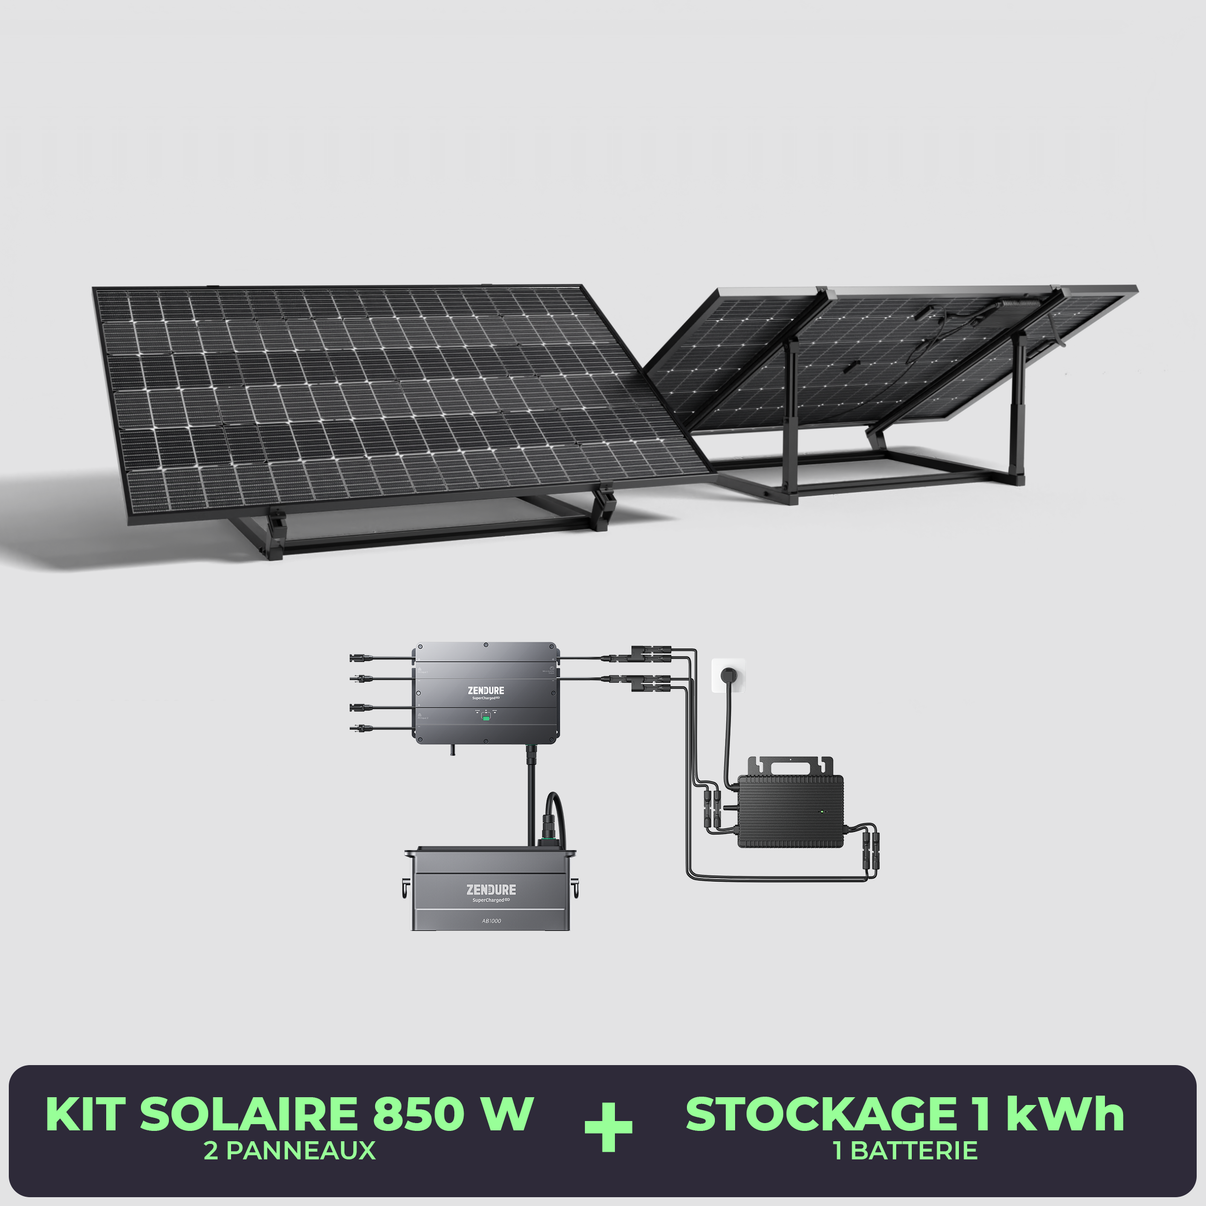 Station solaire Plug and Play sur prise 425Wc - A poser au sol